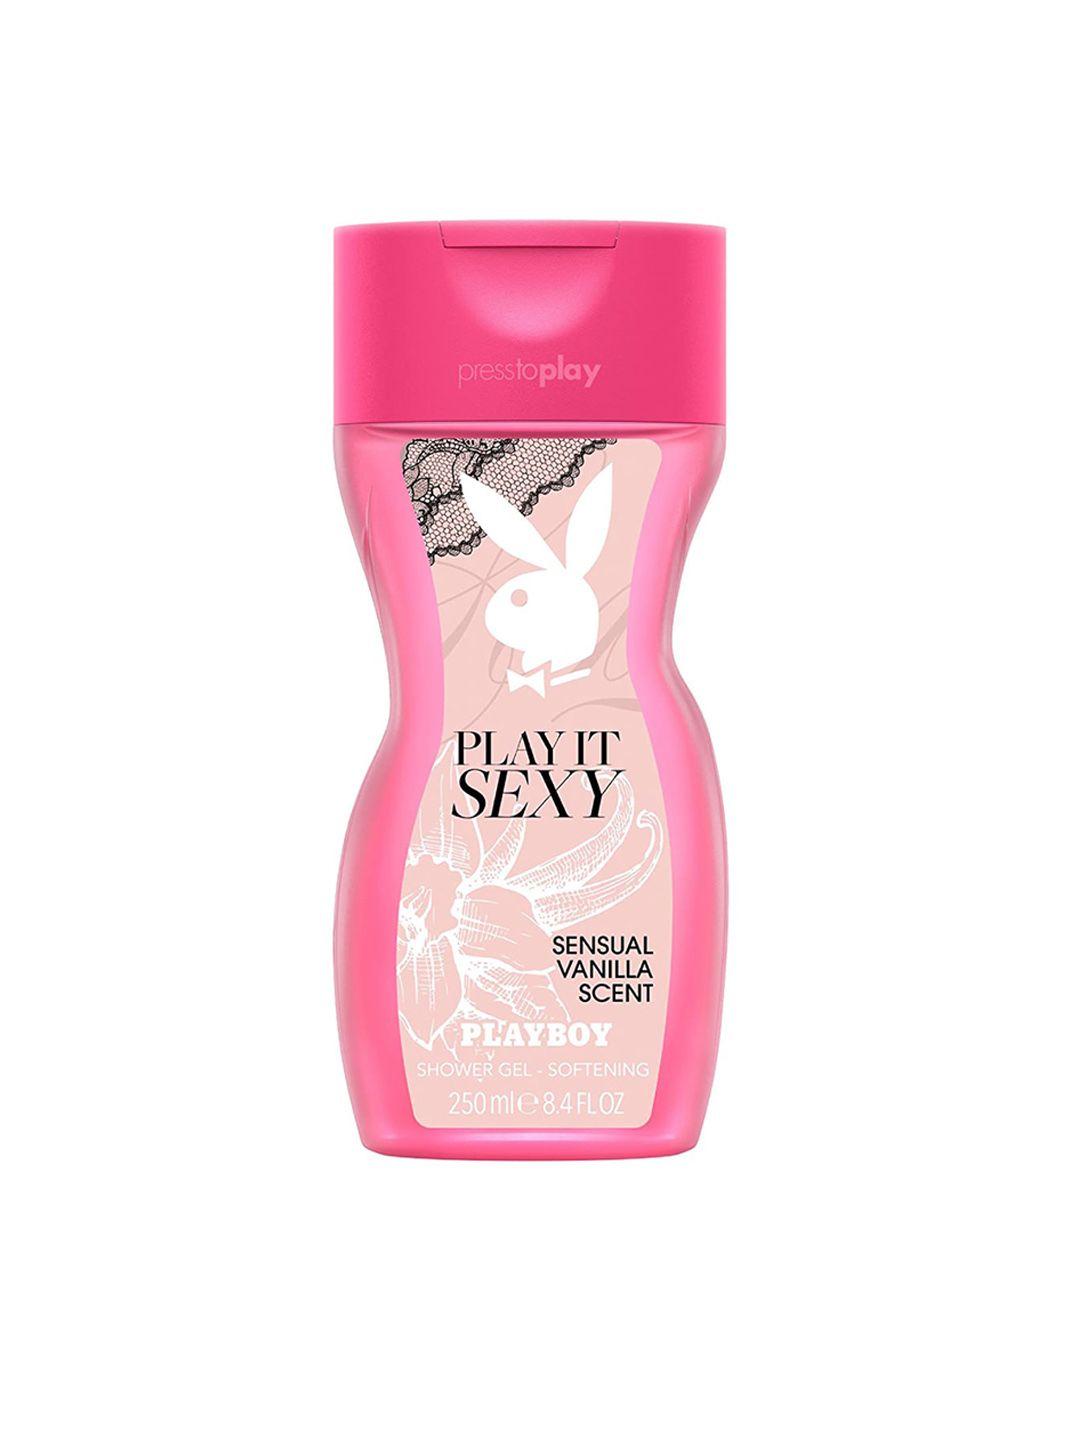 playboy play it sexy shower gel - sensual vanilla scent - 250ml